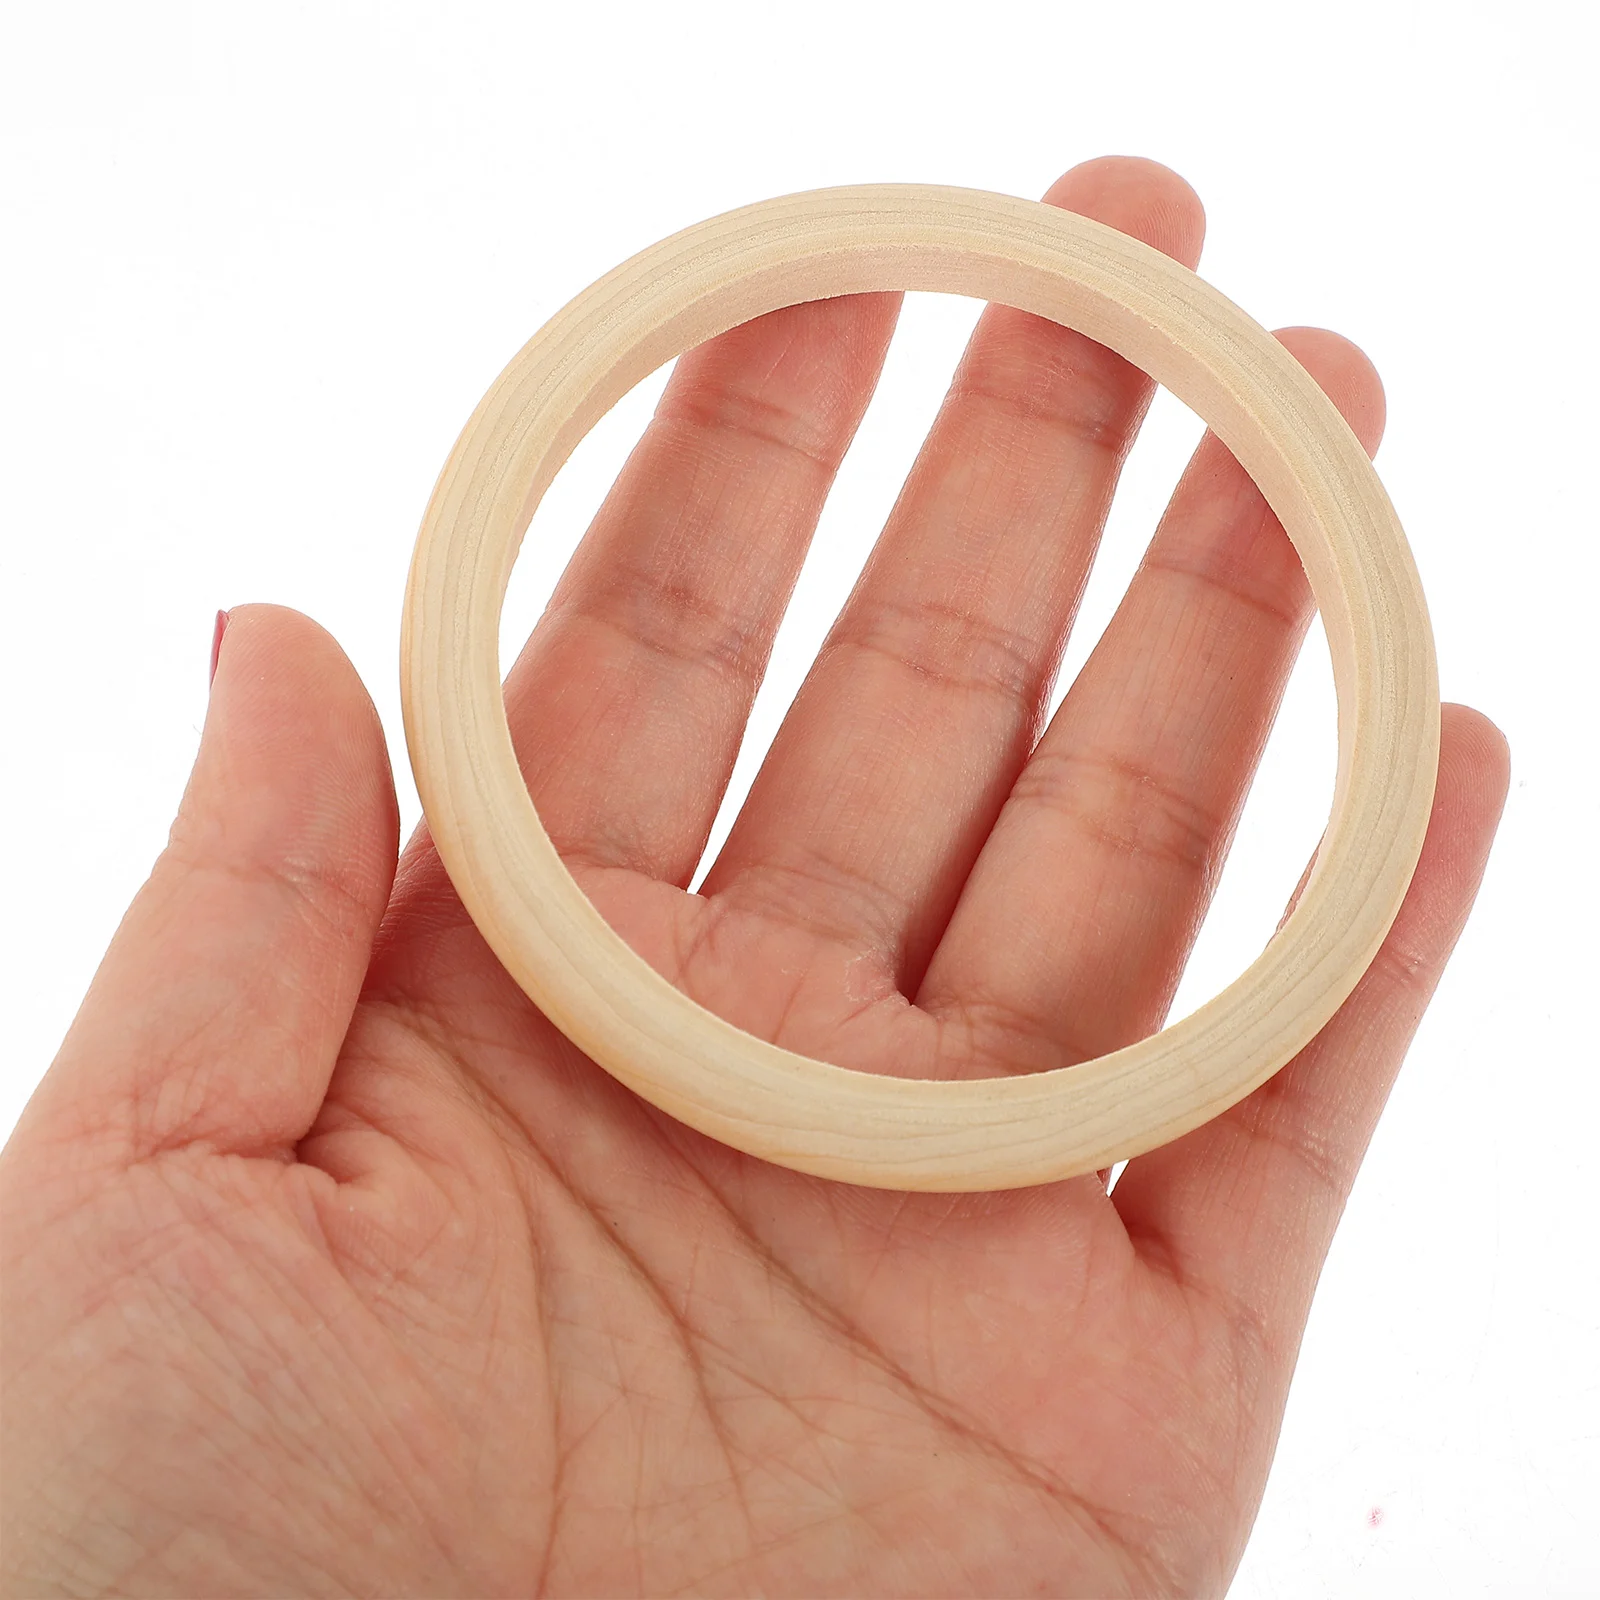 

10 Pcs Wooden Bracelet Ring Unpainted Bracelets Crafts Making Cuff And Unfinished Child Bangle DIY Circles